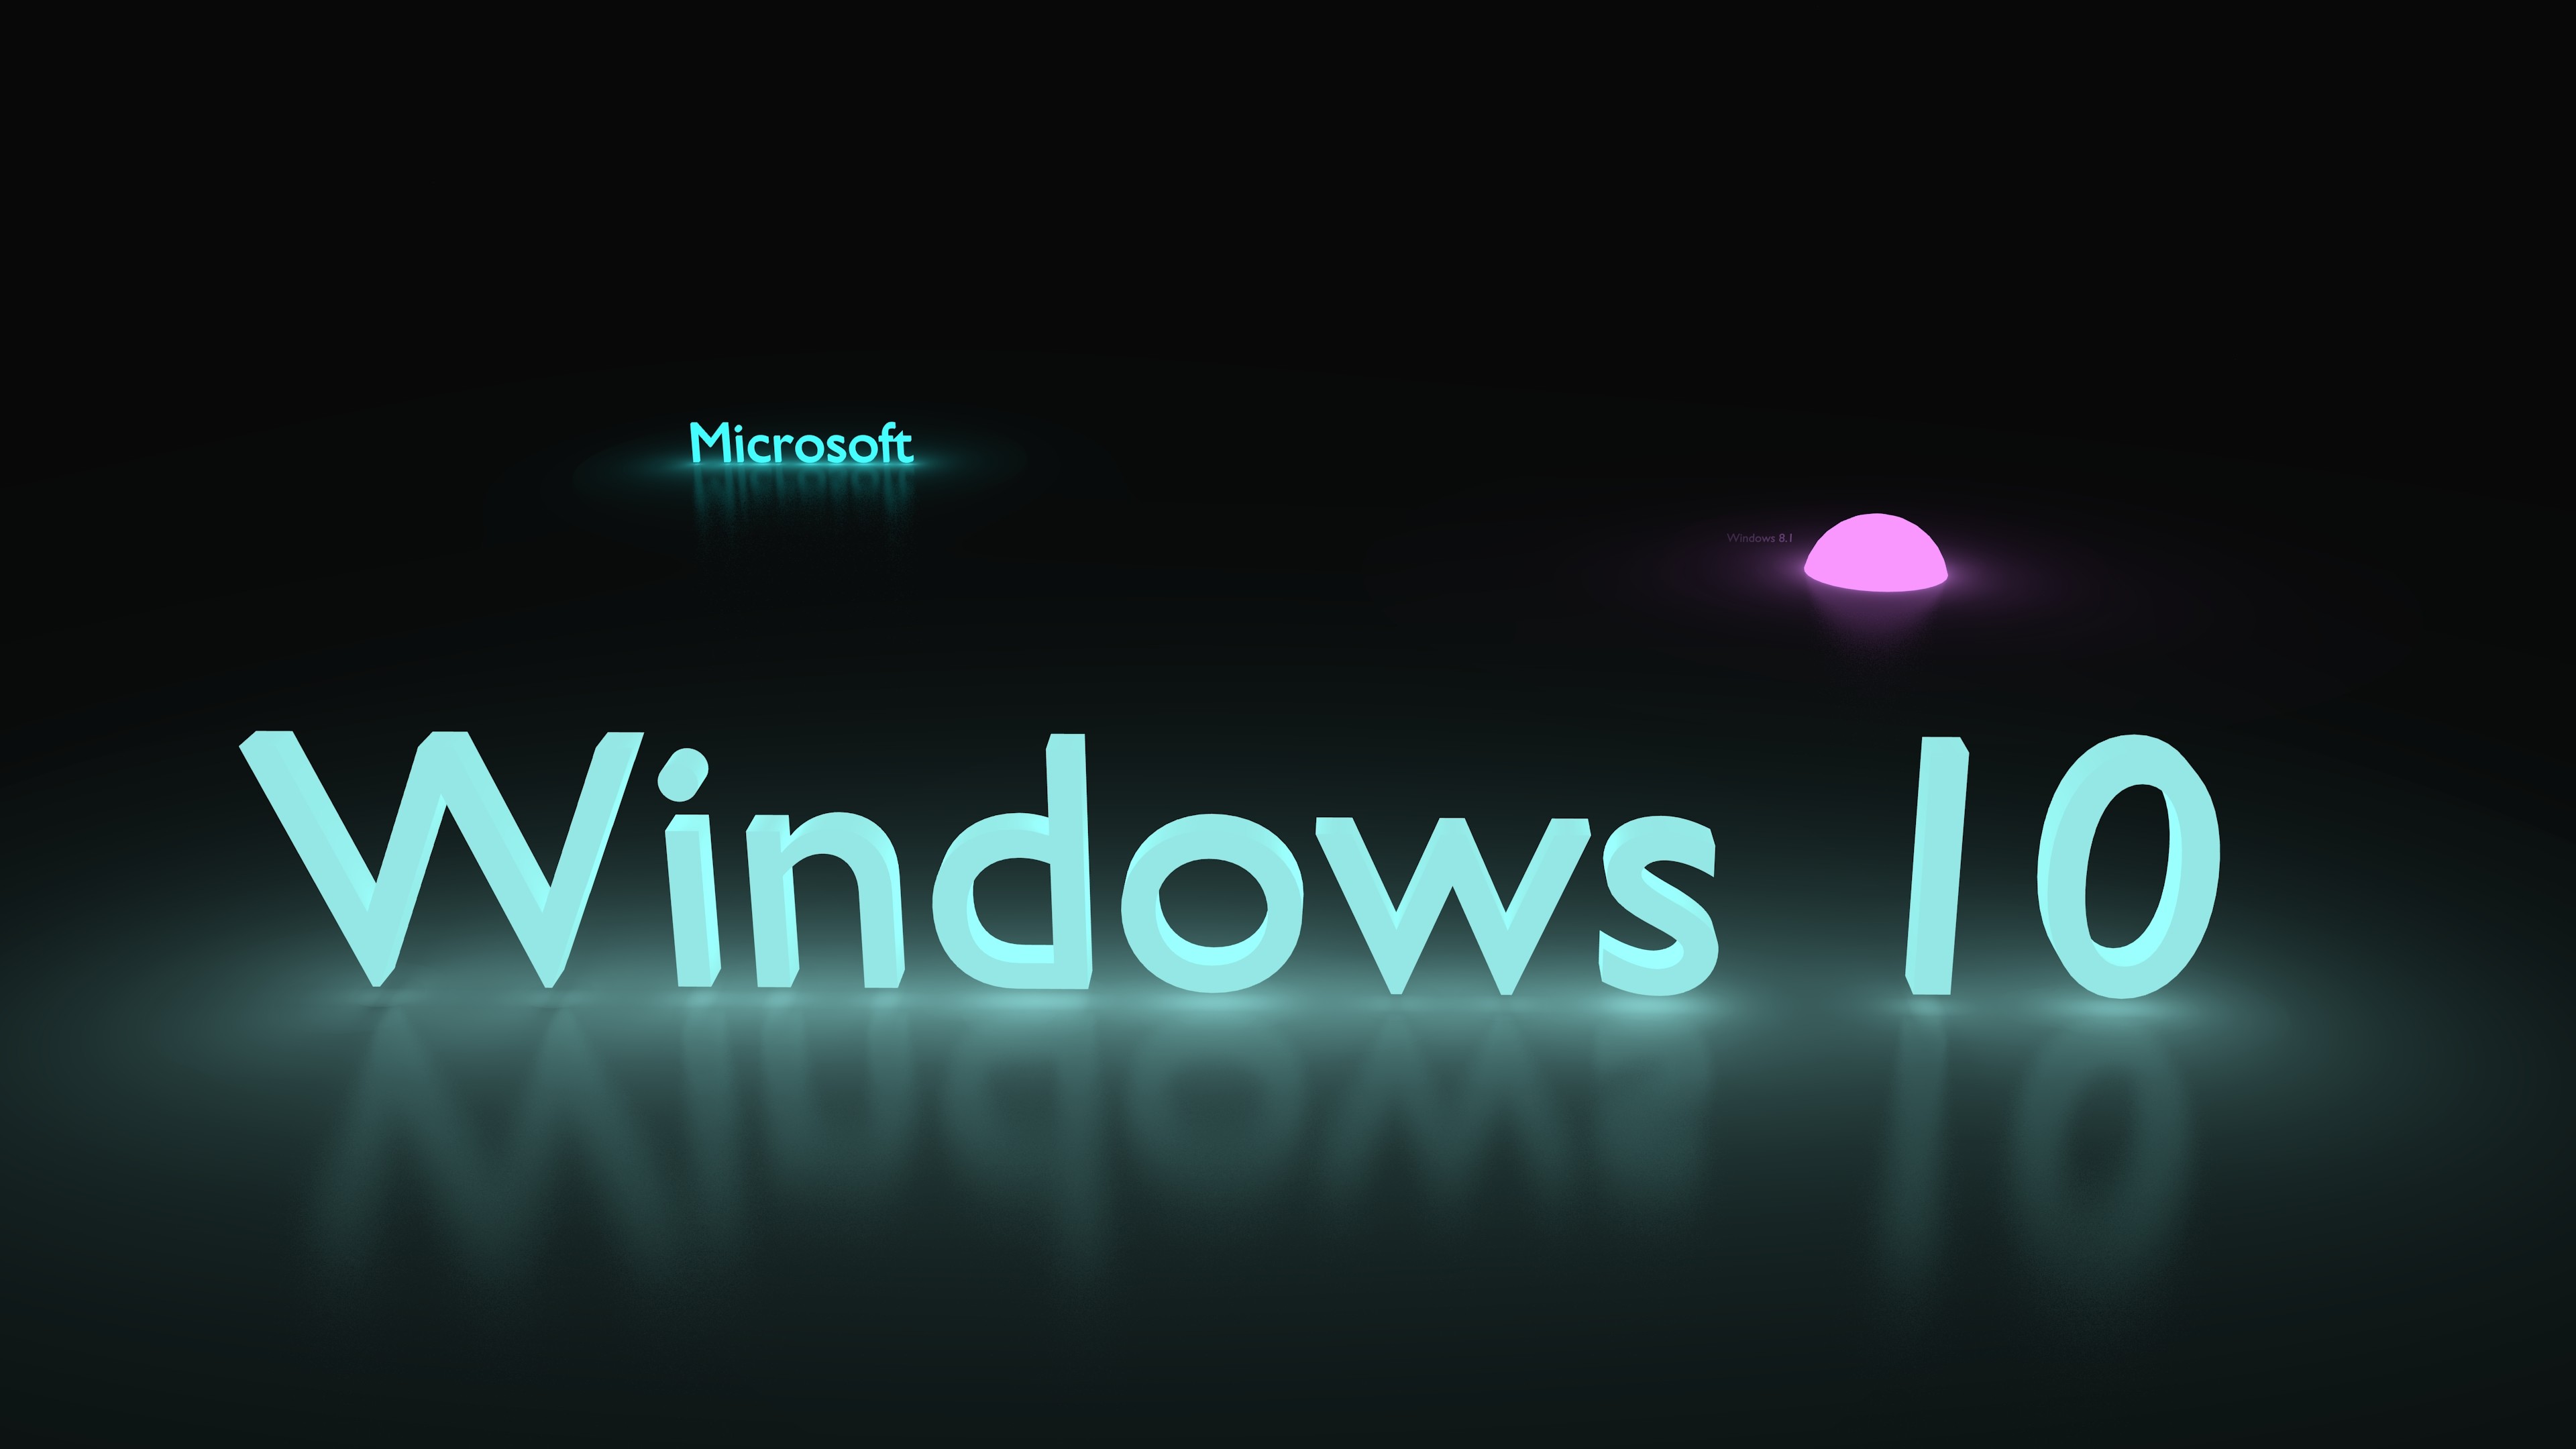 3840x2160 Windows 10 glowing blue